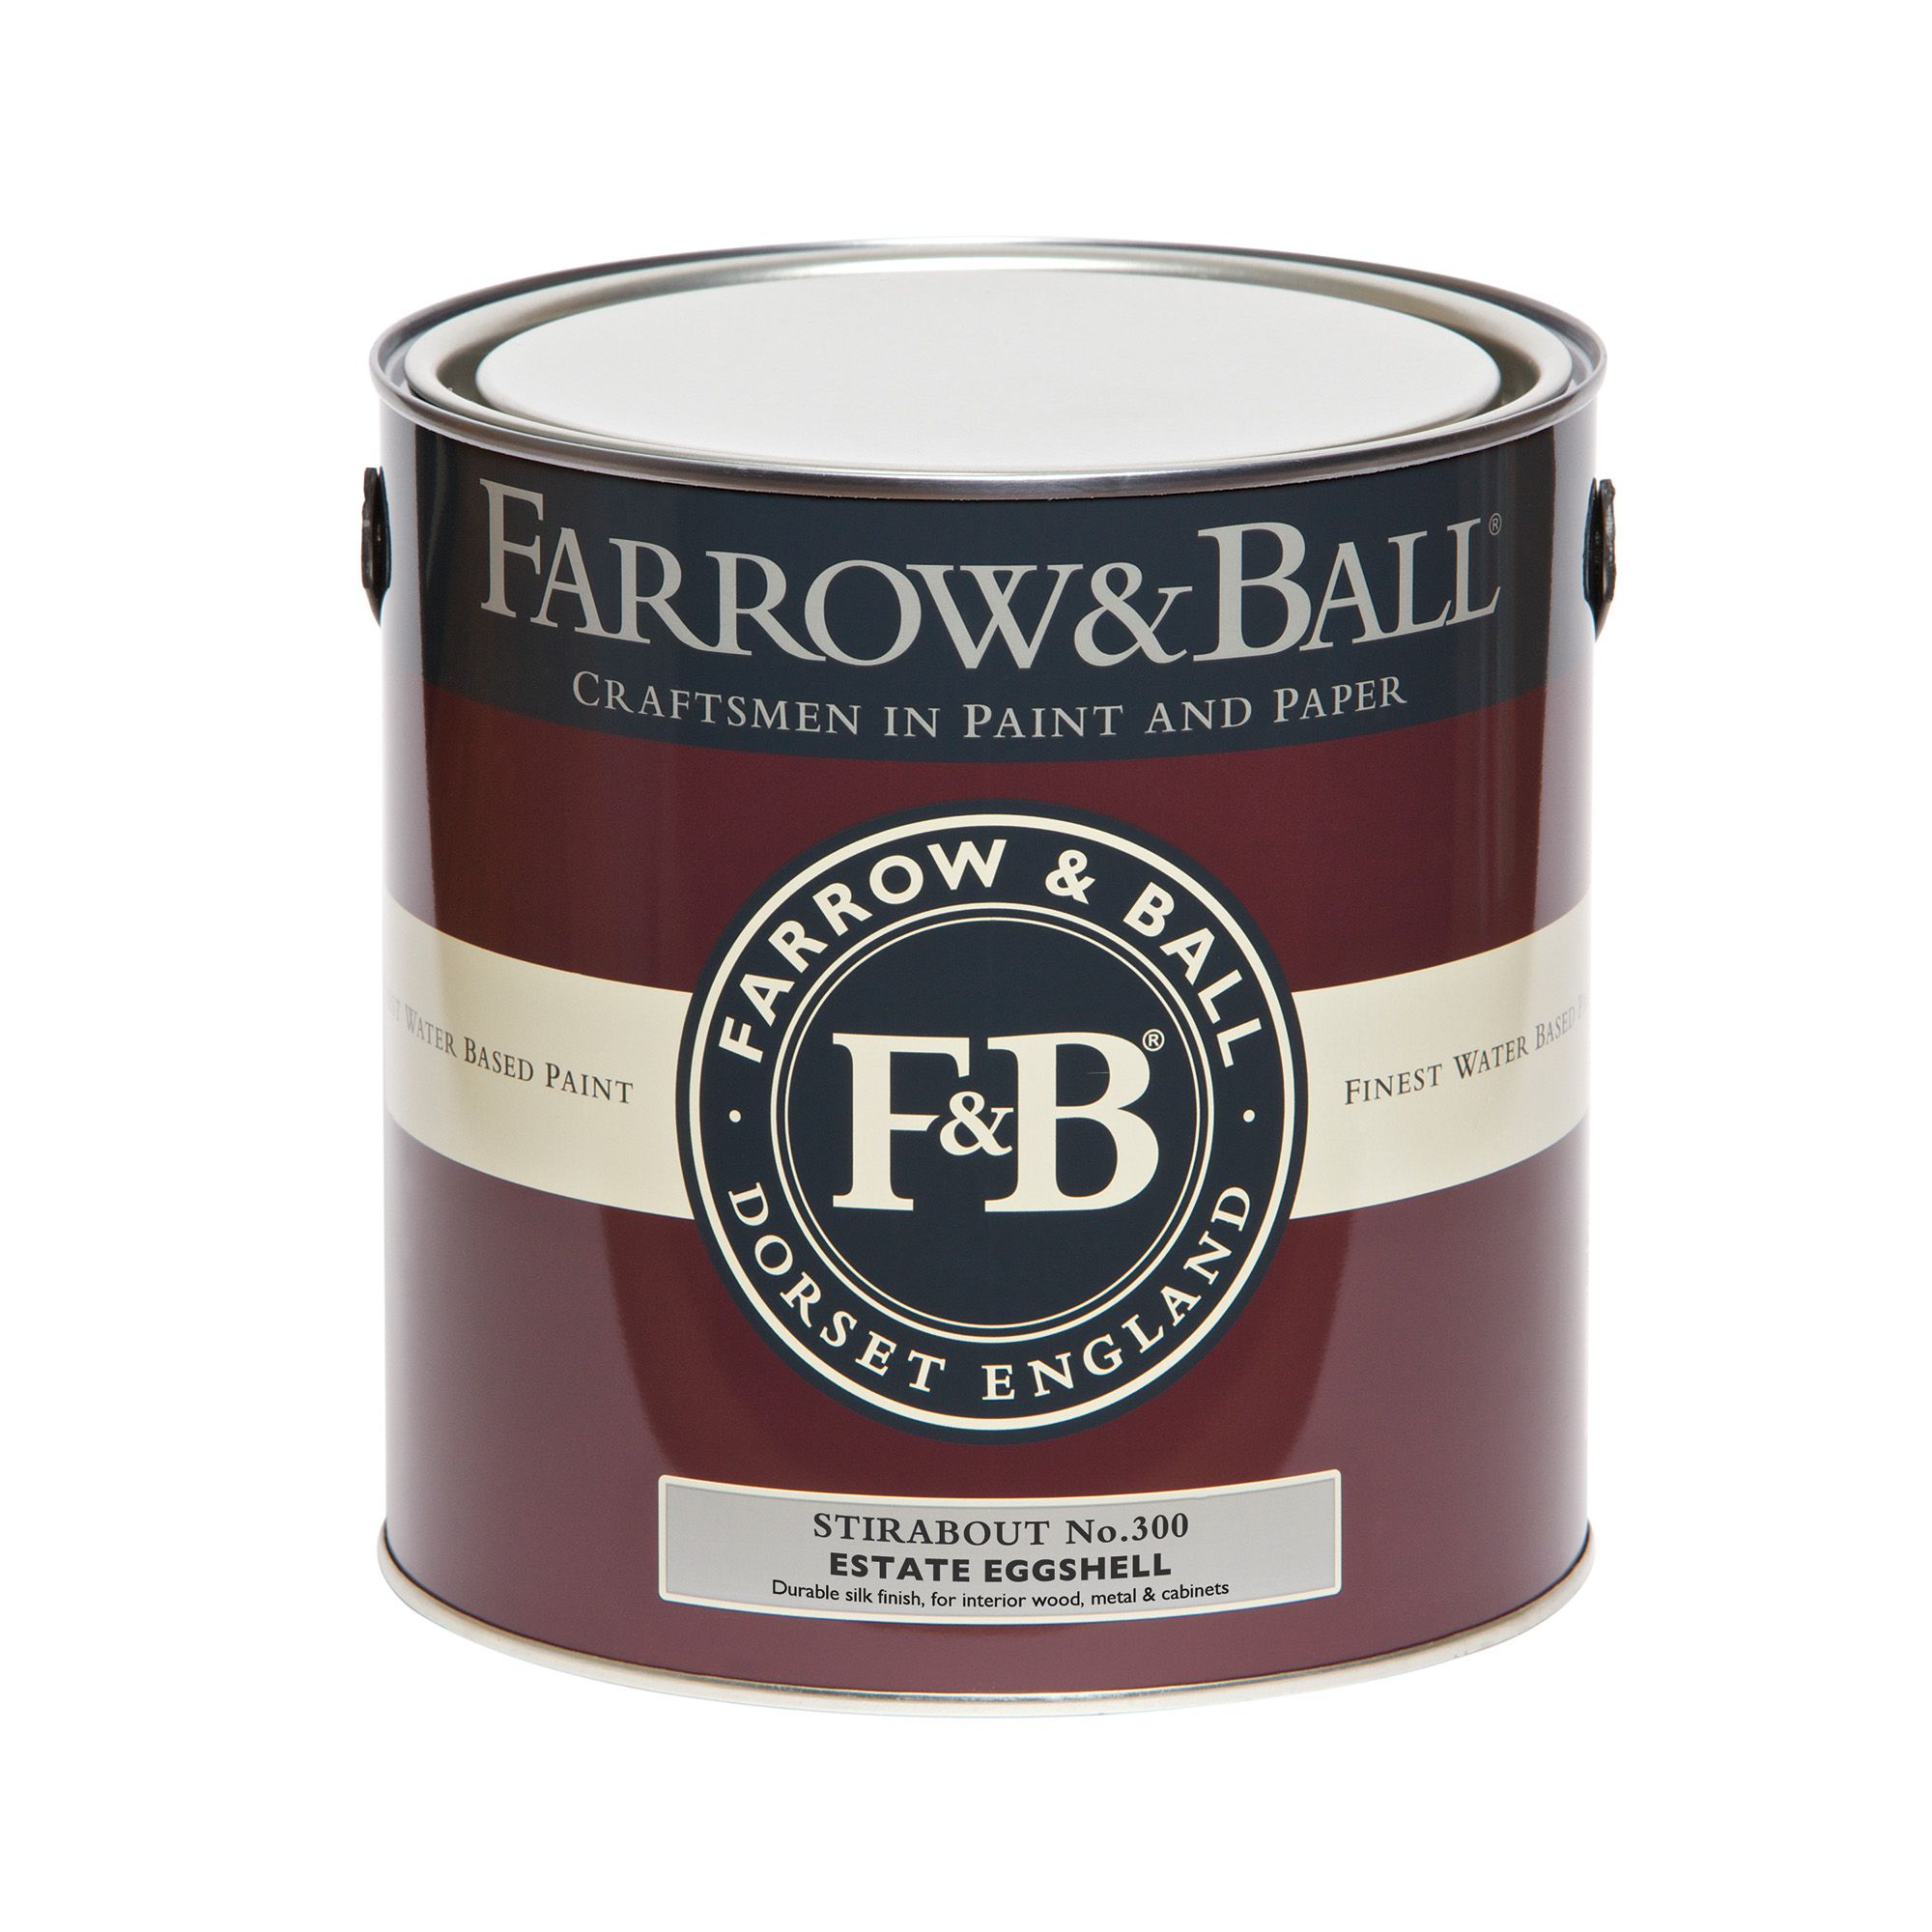 Farrow & Ball Estate Stirabout No.300 Eggshell Paint, 2.5L